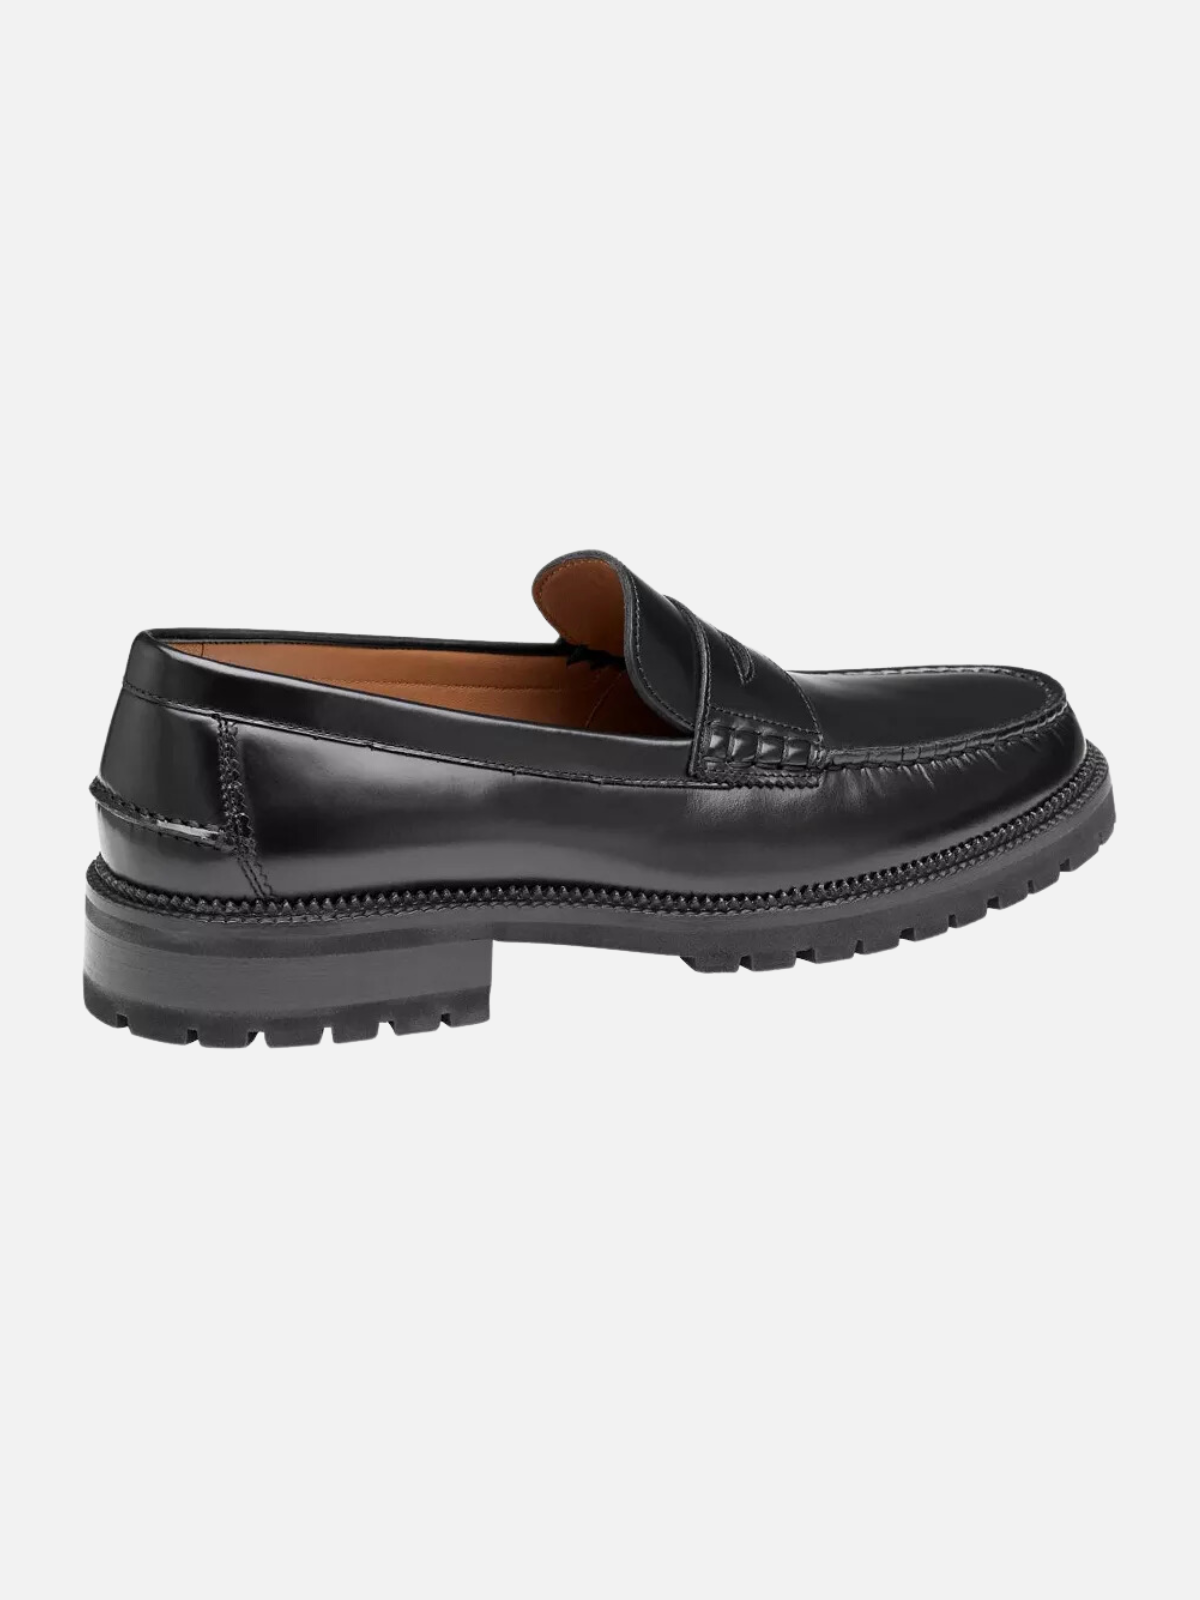 johnston & murphy donnell penny loafer black shine leather lug sole dress shoe kempt athens ga georgia men's clothing store